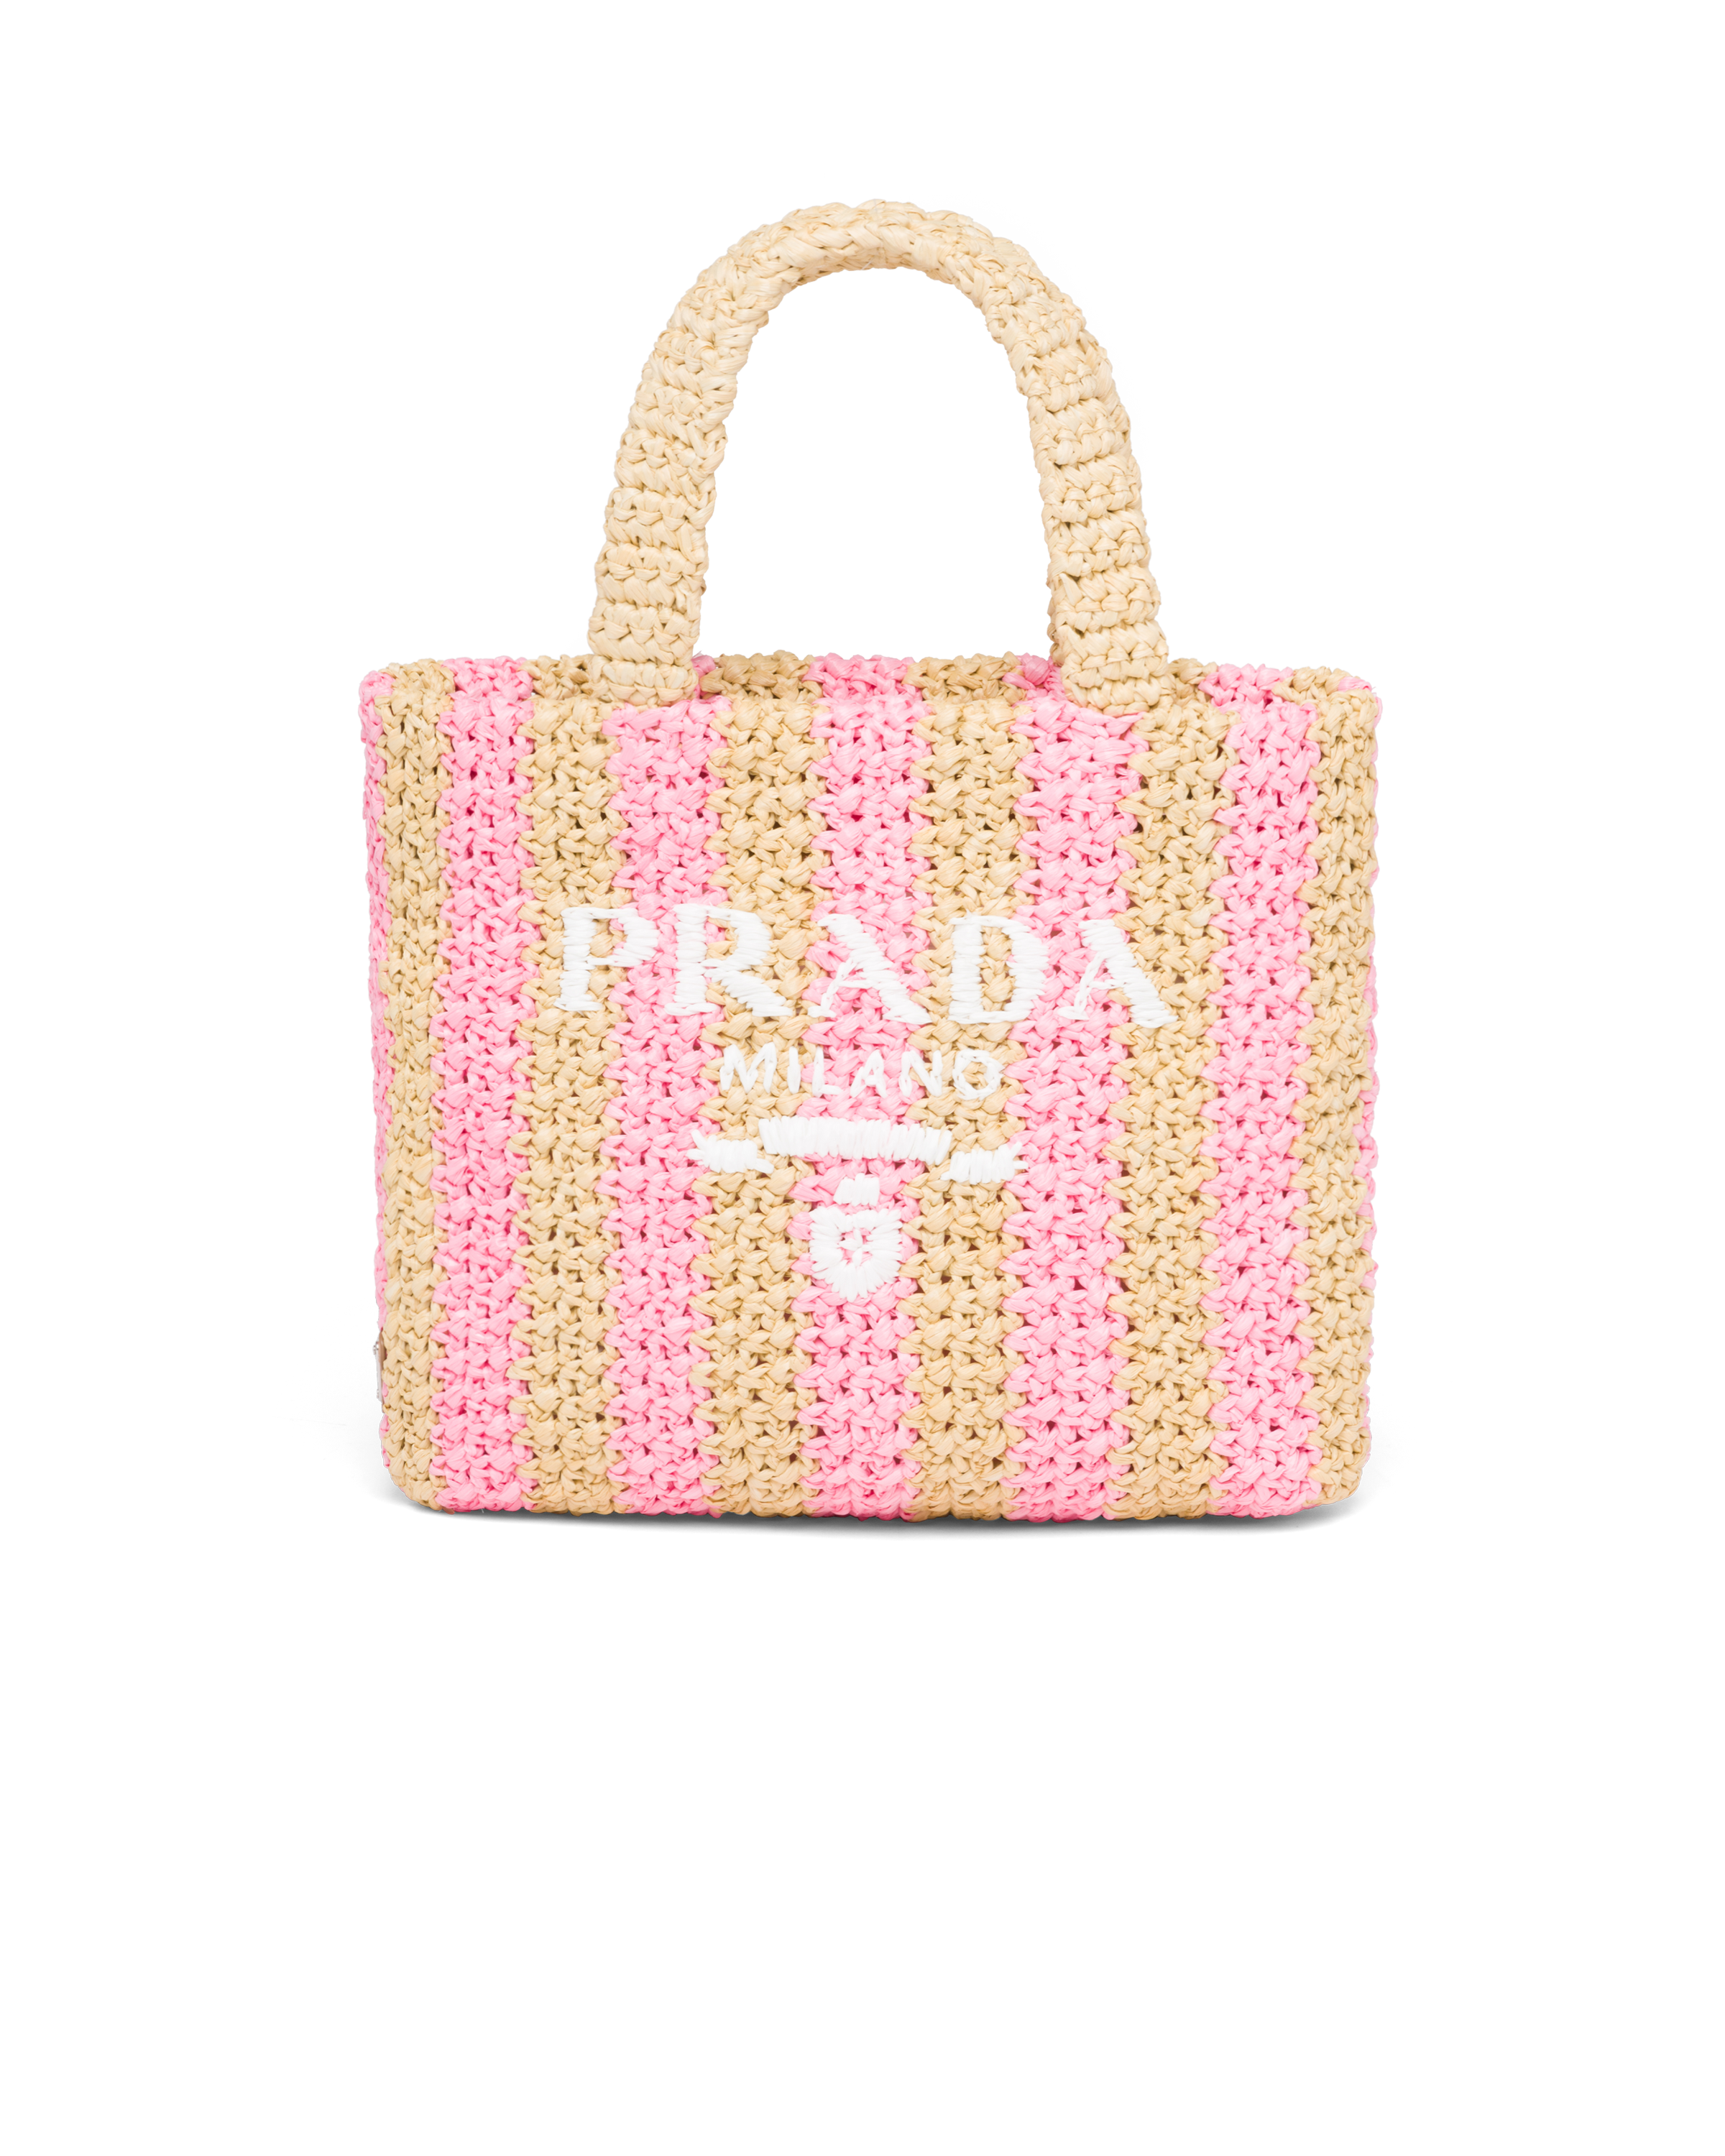 Prada Small Crochet Tote Bag